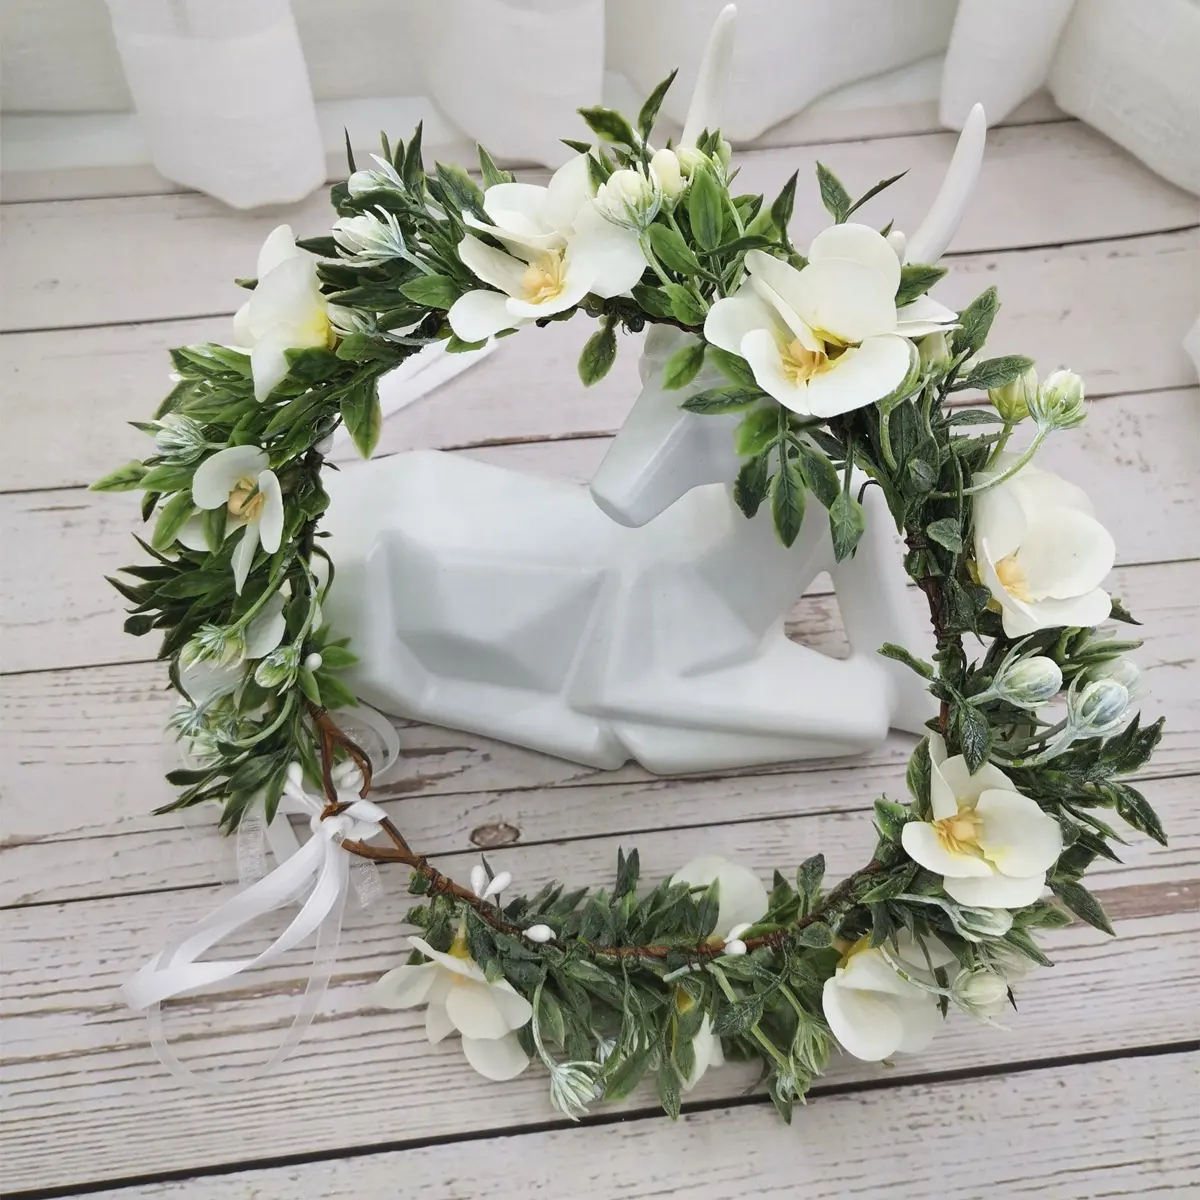 Grosir karangan bunga kering murah buatan tangan karangan bunga kering alami untuk dekorasi rumah pernikahan